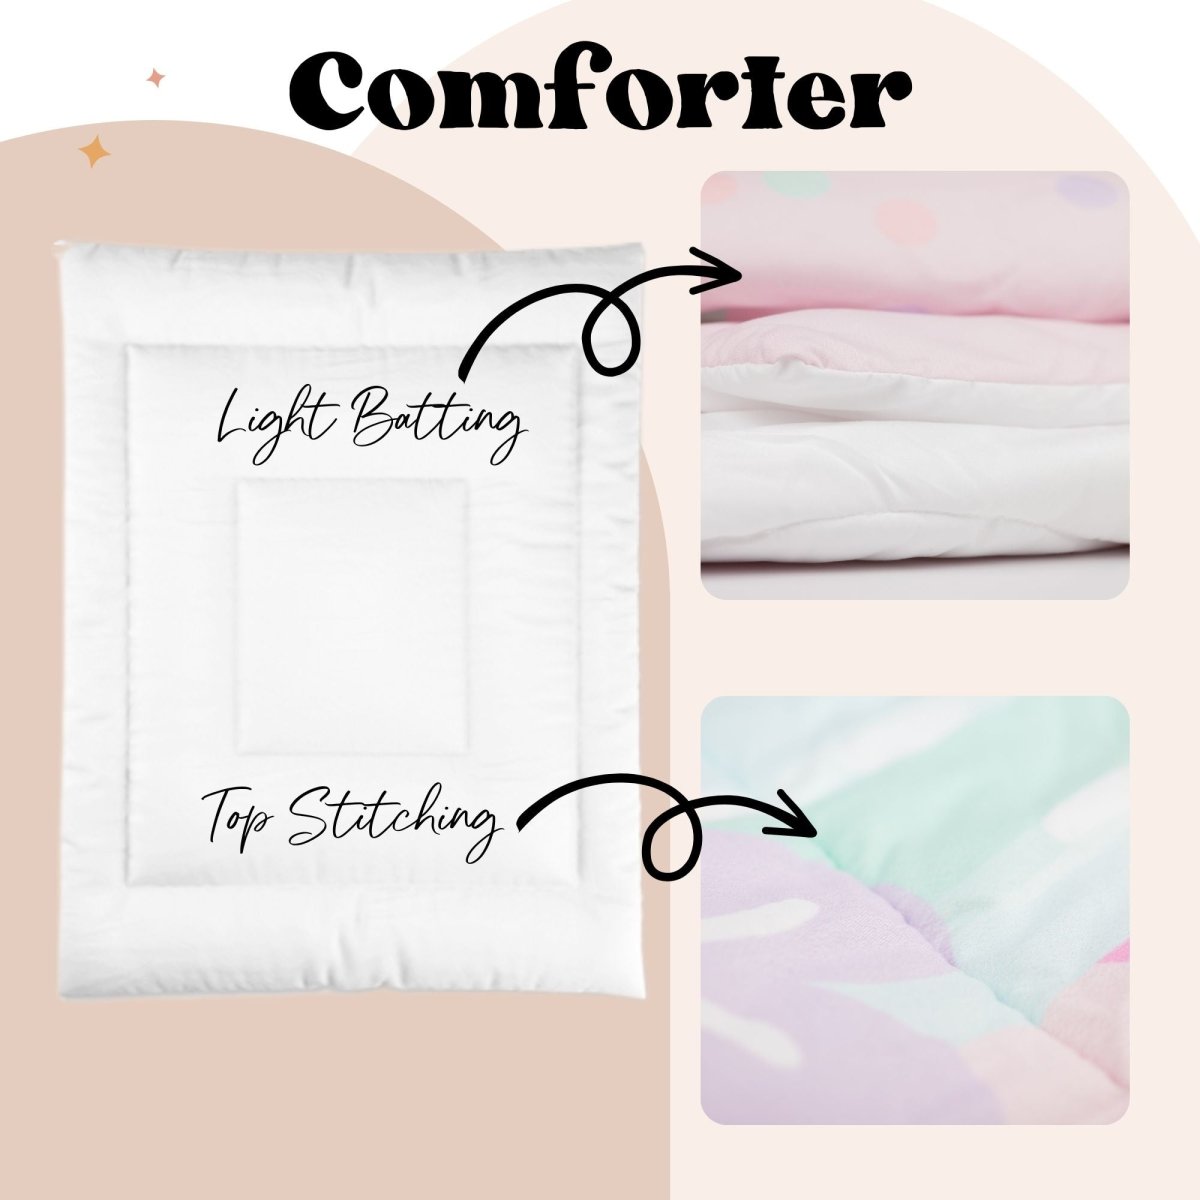 Unicorn & Rainbows Kids Bedding Set (Comforter or Duvet Cover) - text, Unicorn Dreams,